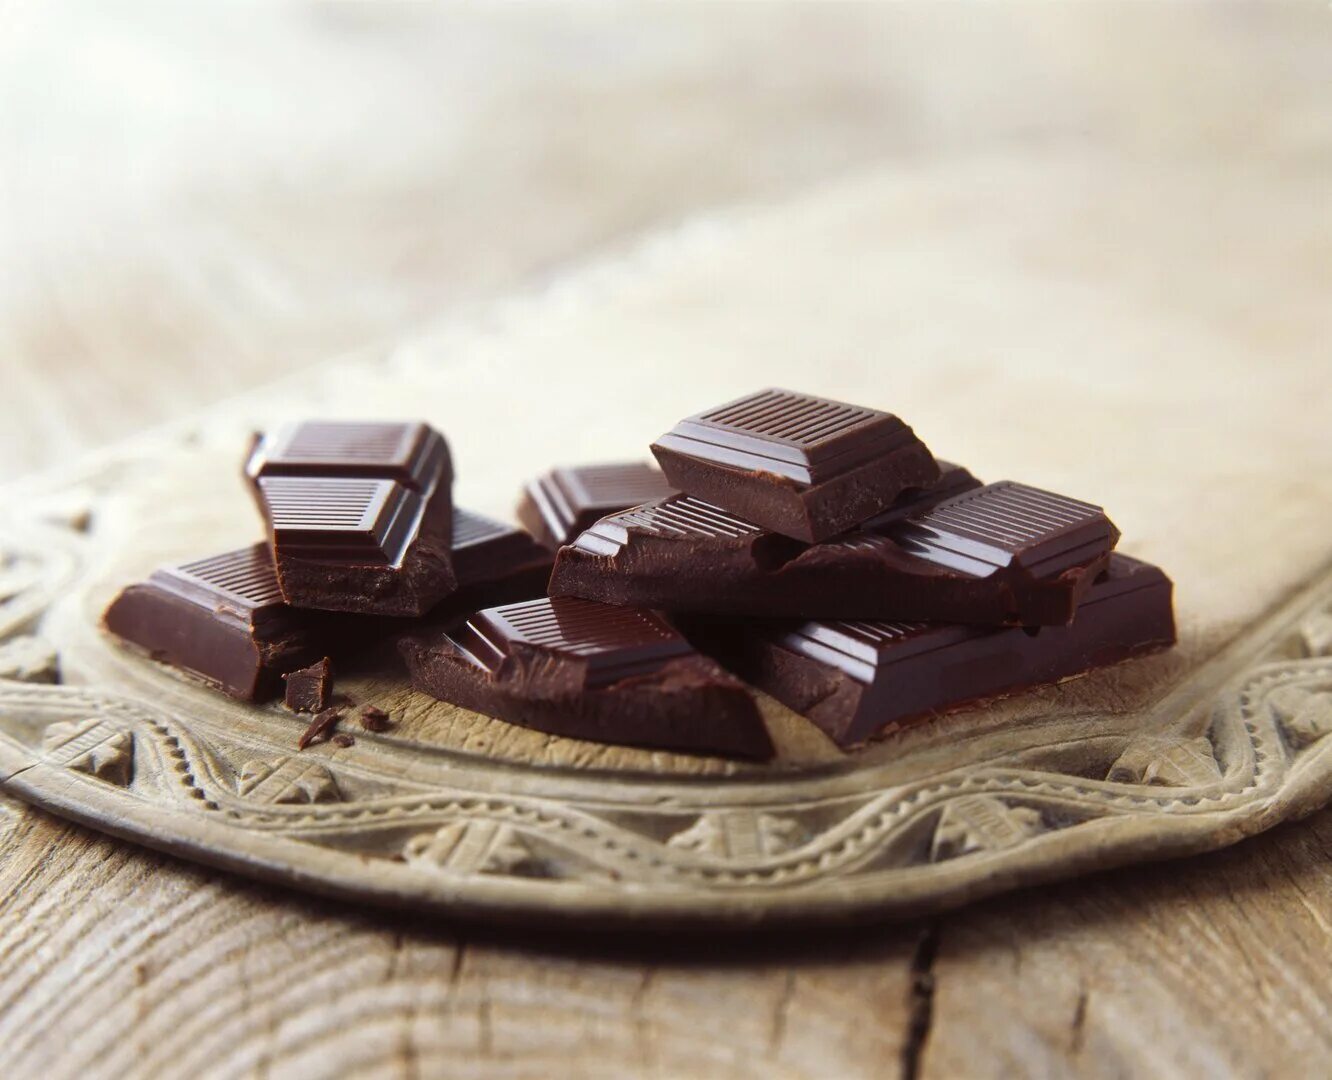 Шоколад. Темный шоколад. Шоколад Горький. Темный шоколад и Горький шоколад. Шоколад вещества